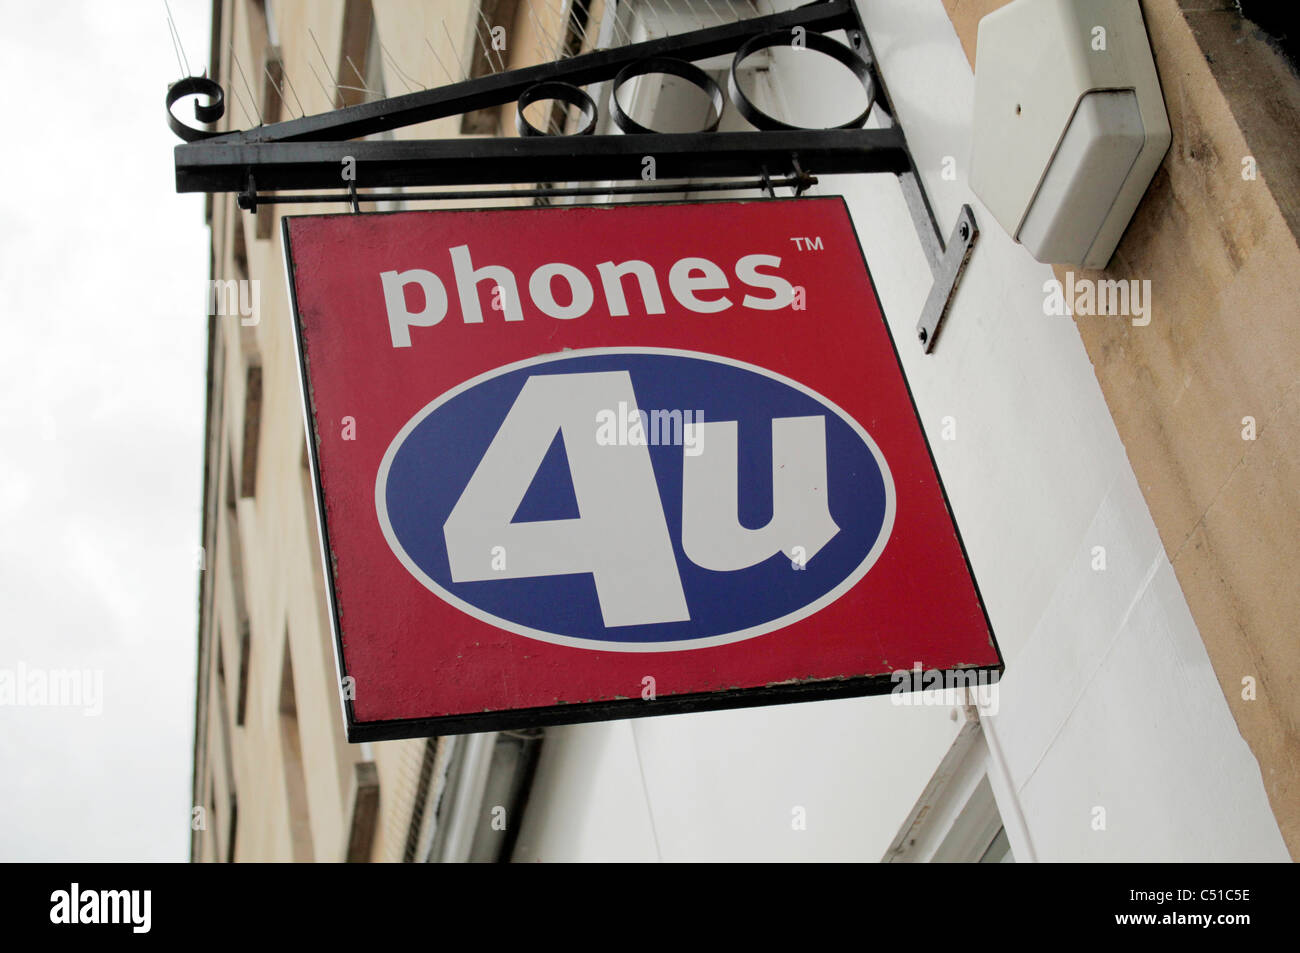 Phones 4U sign outside shop Stock Photo